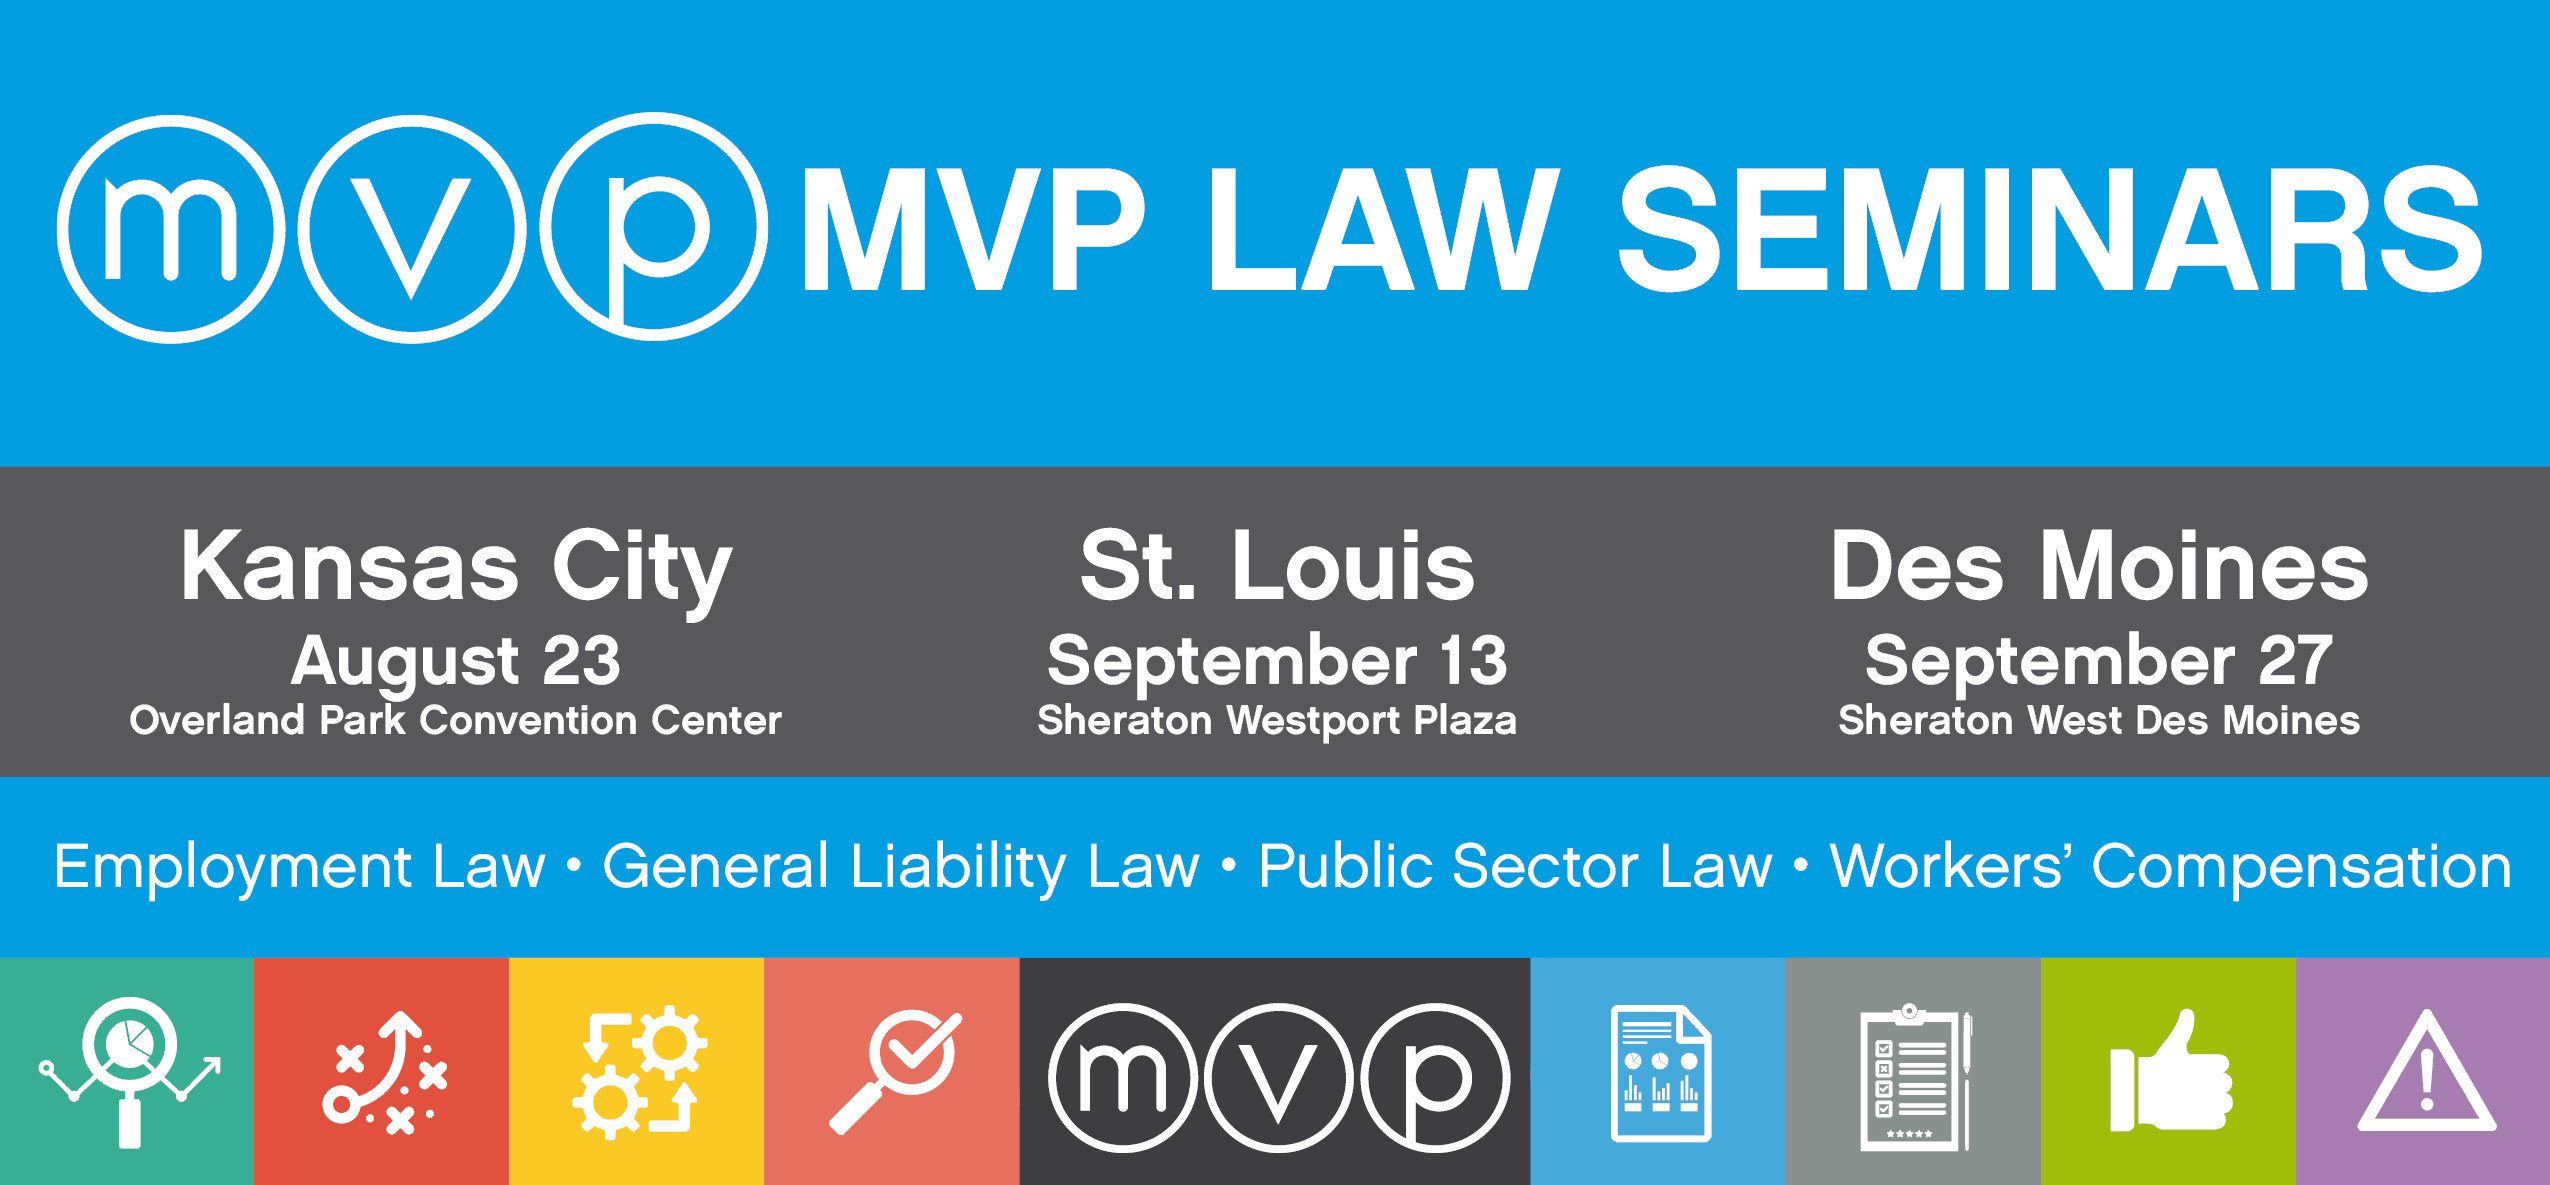 MVP Law Seminars 2018 Schedule graphic